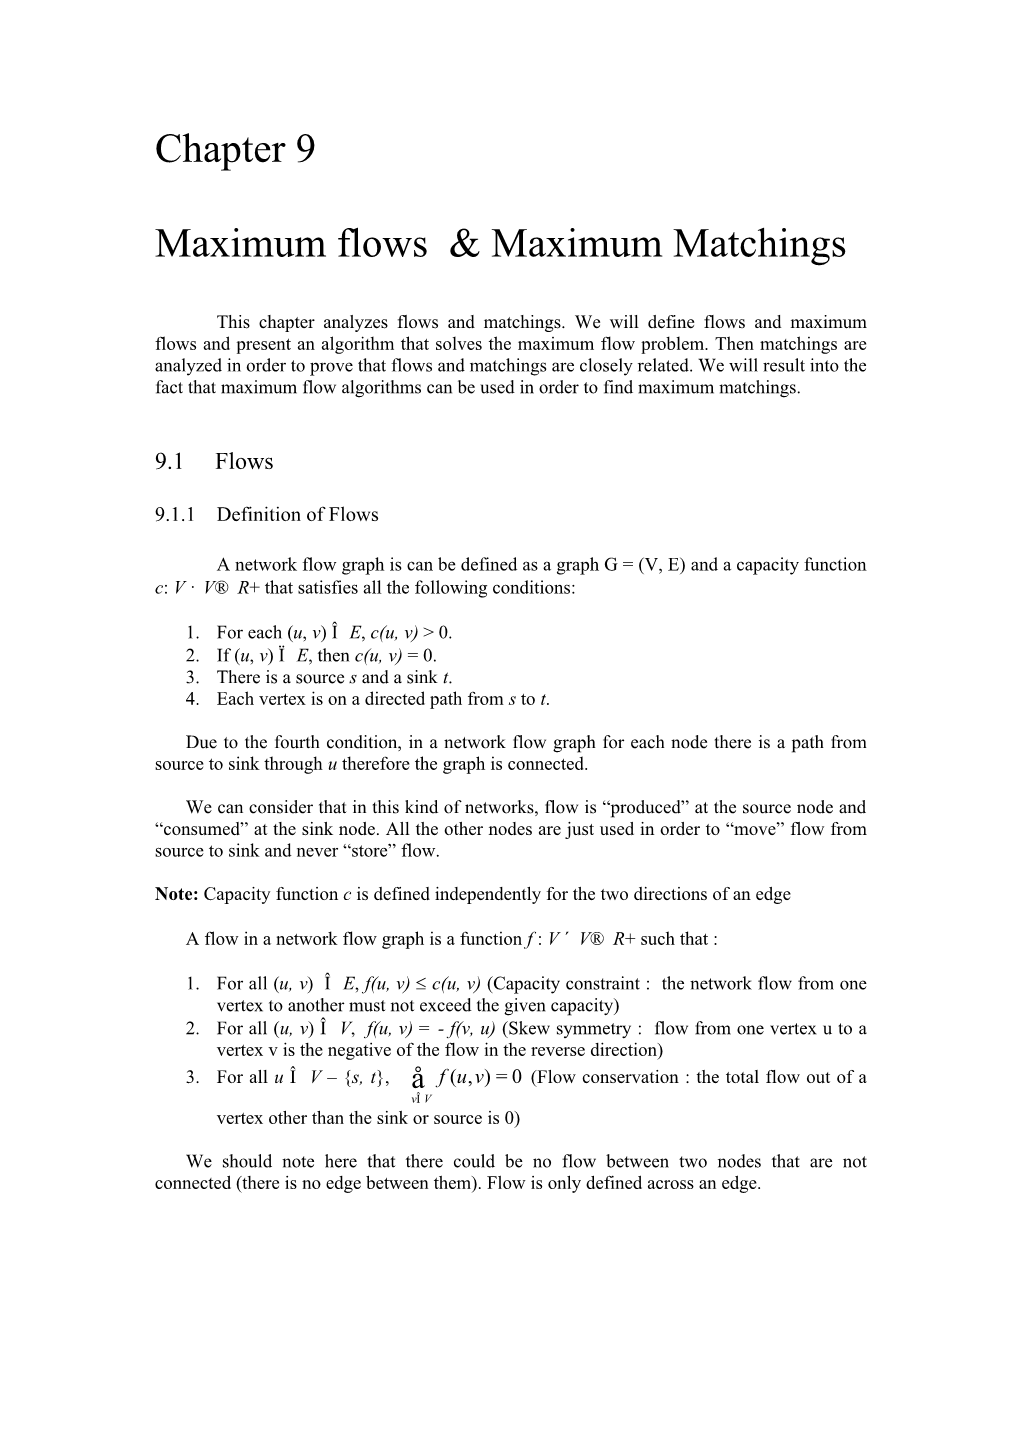 Chapter 9 Maximum Flows & Maximum Matchings